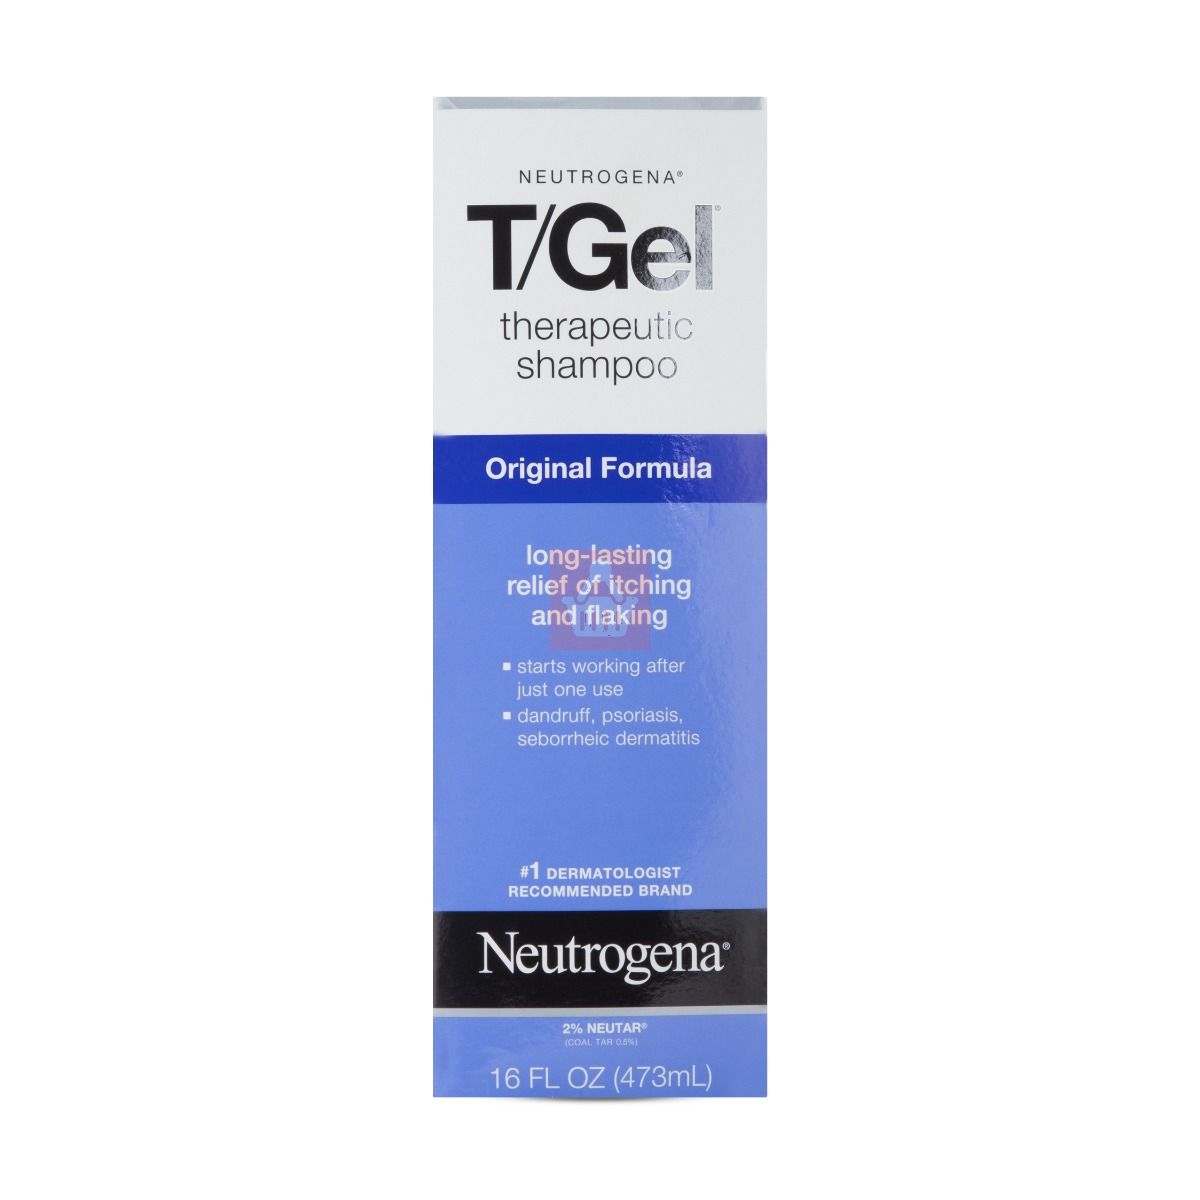 Neutrogena T/Gel Therapeutic Shampoo Original Formula 473ml